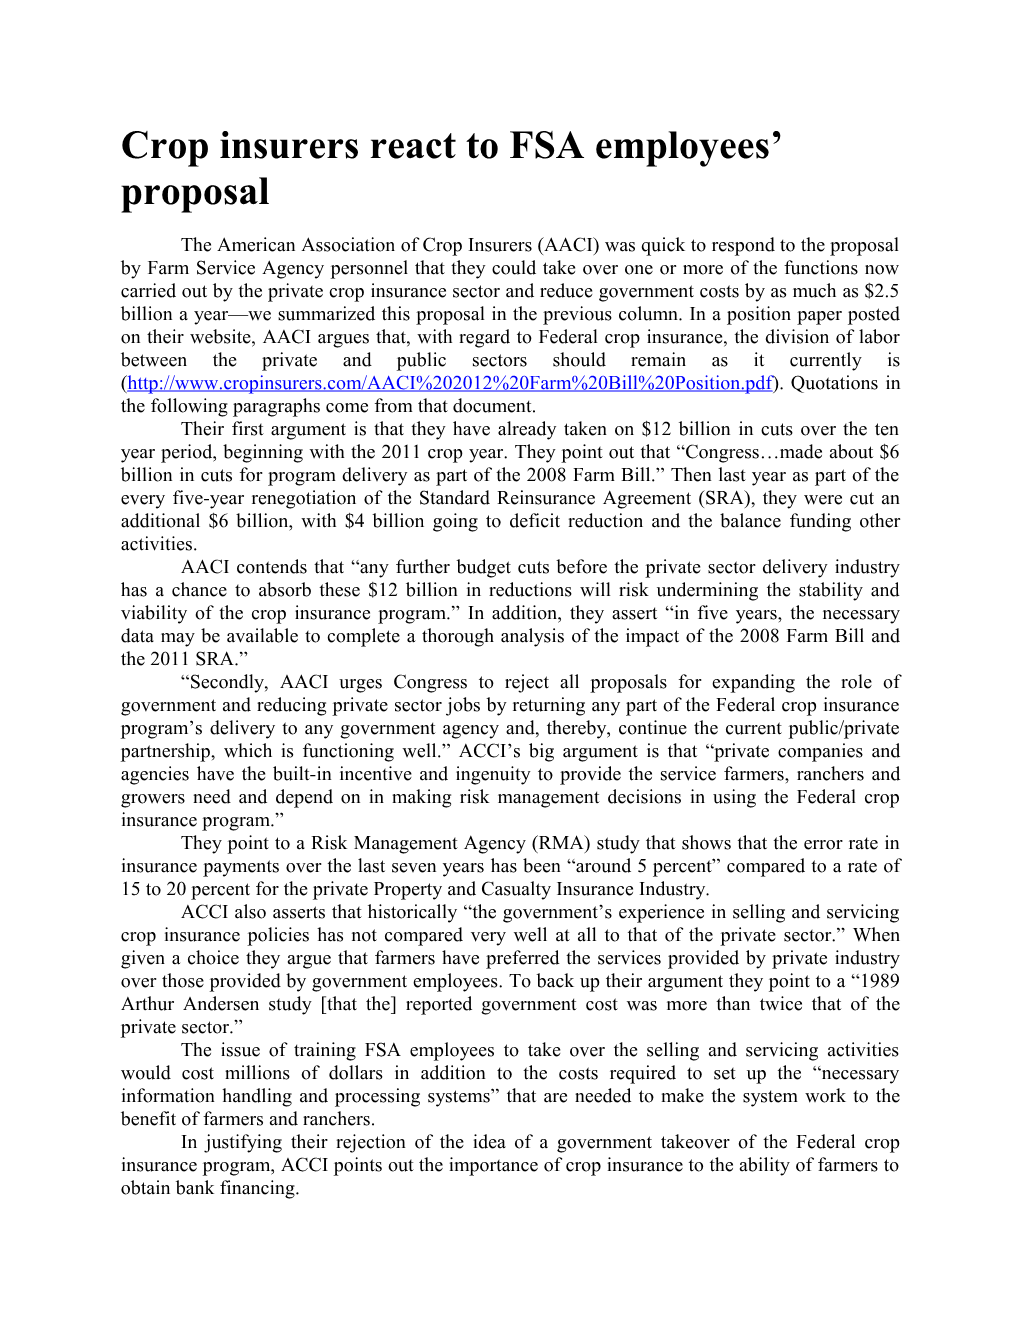 Crop Insurers React to FSA Employees Proposal